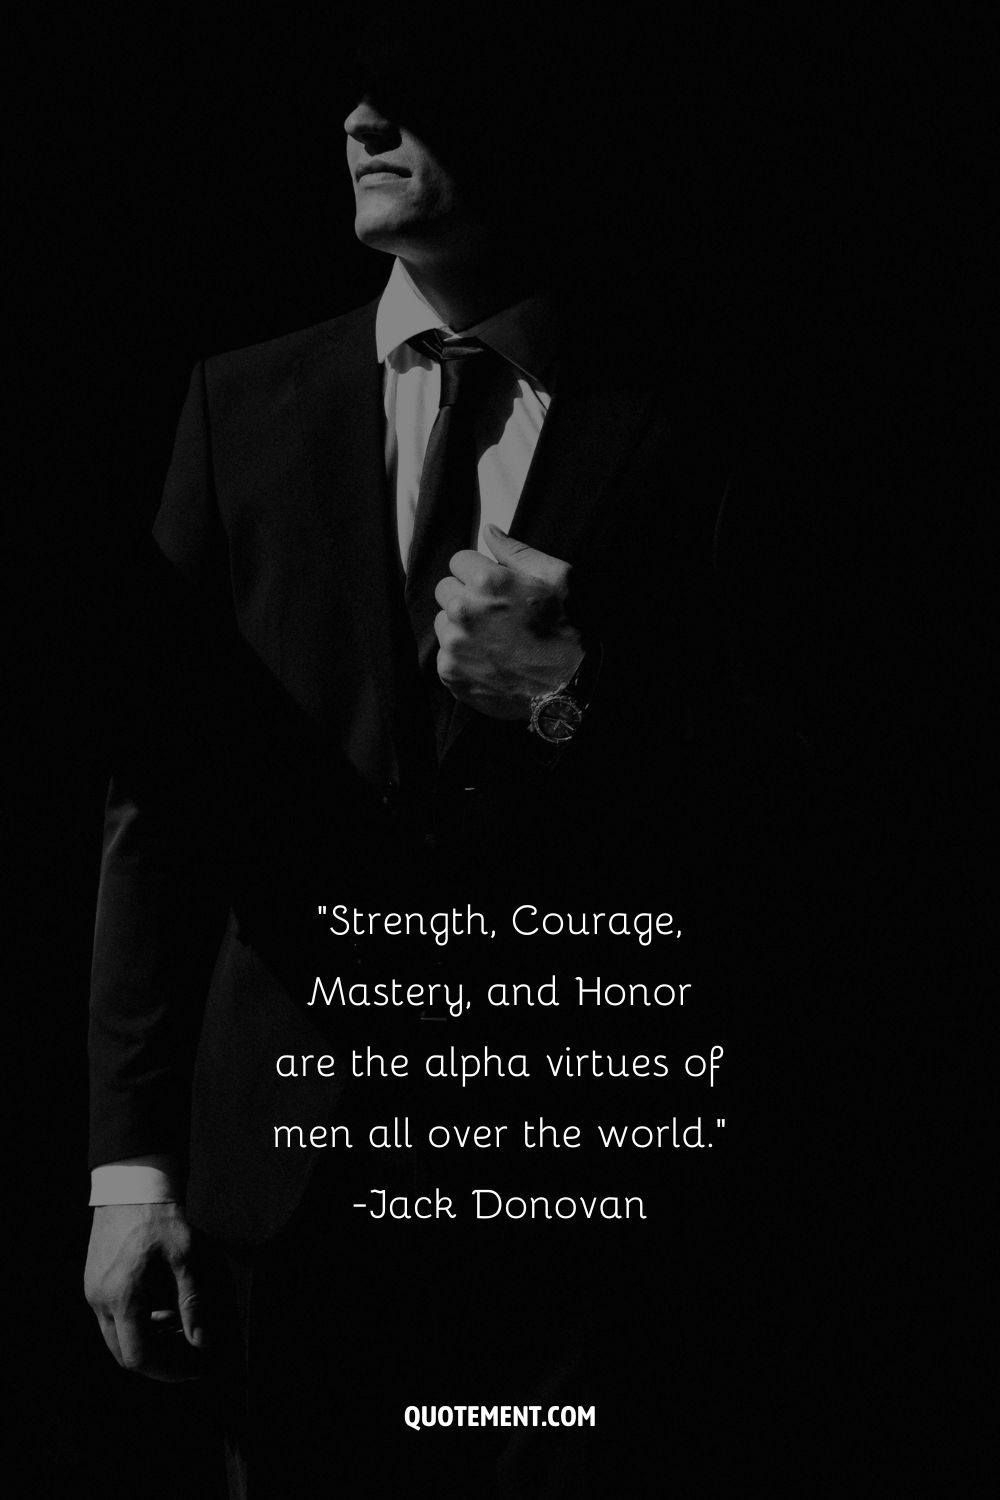 a gentleman representing quote of encouragement for men